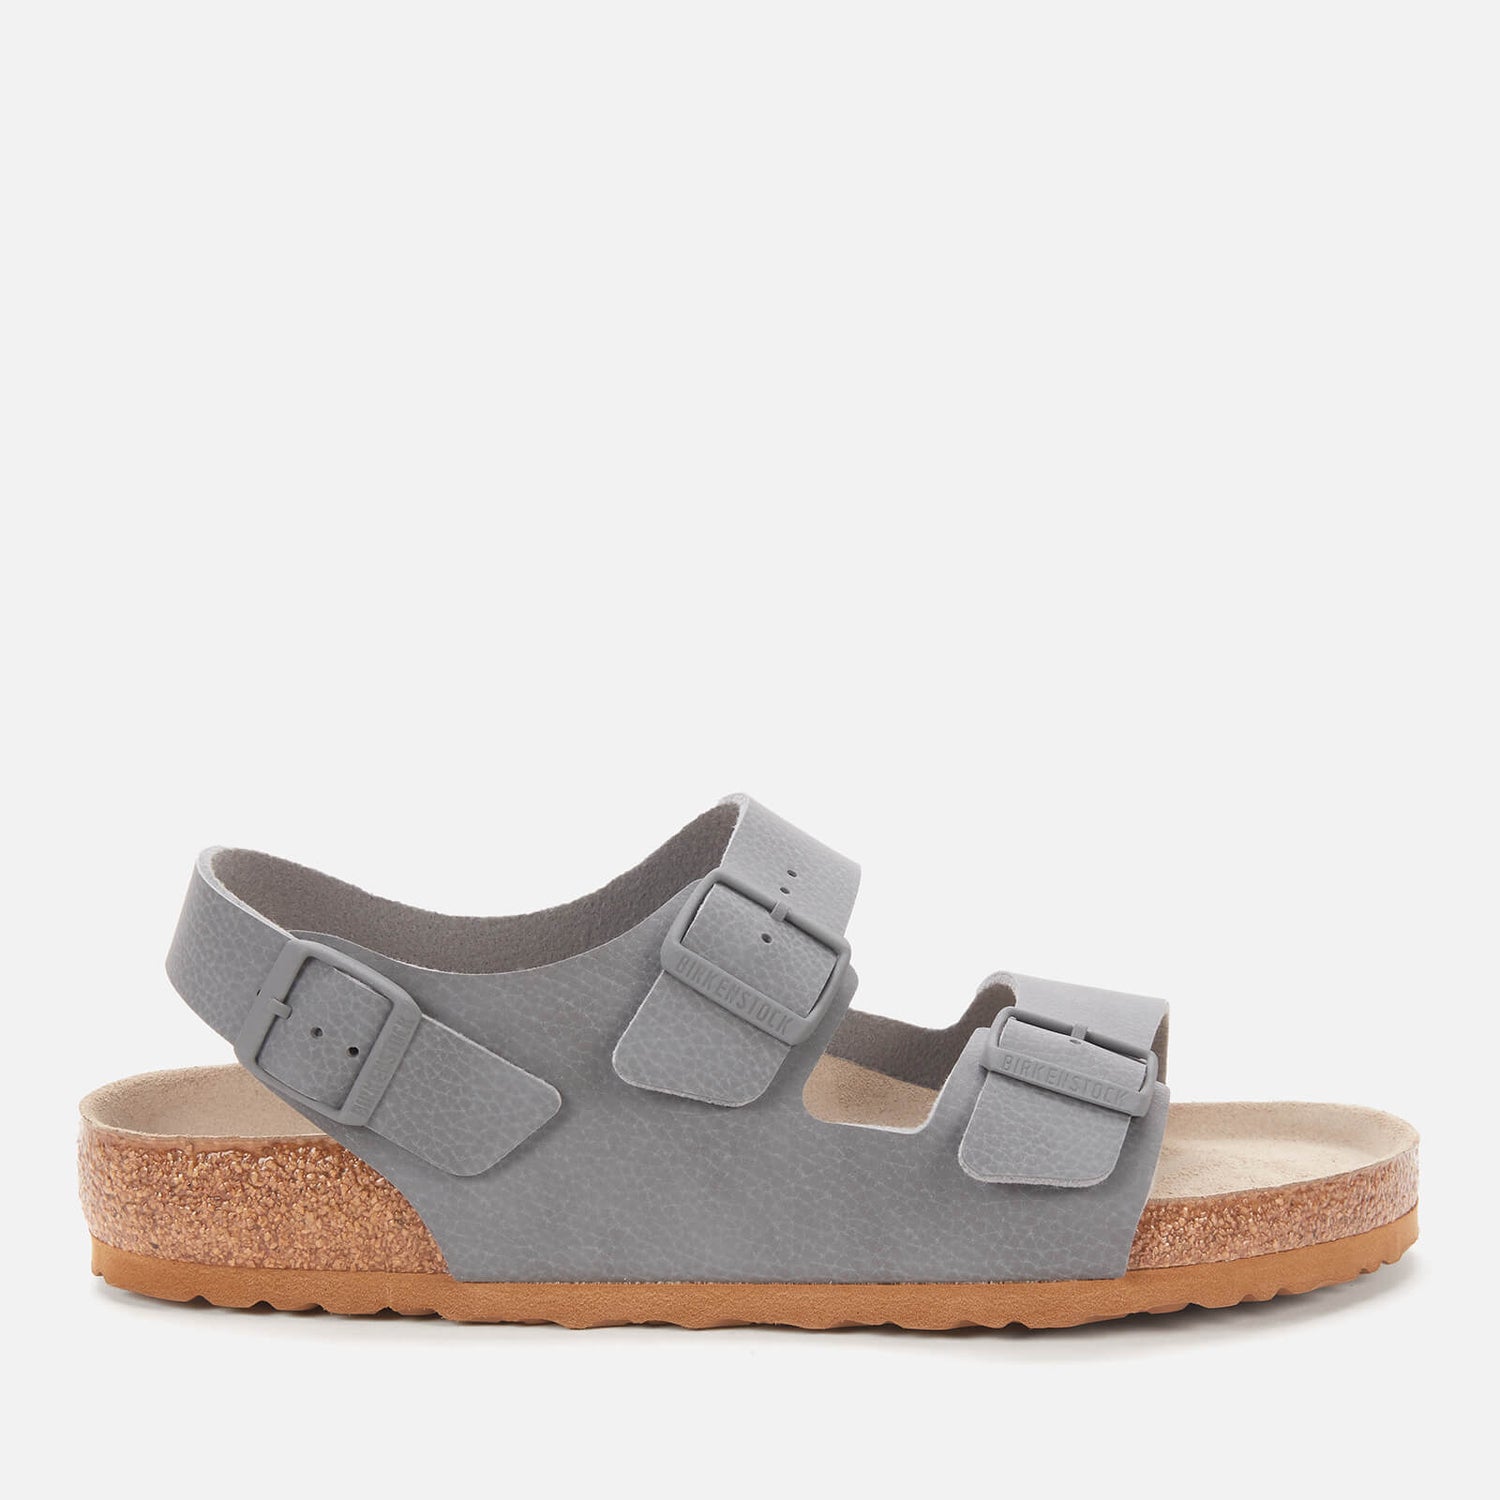 Birkenstock Men's Milano Double Strap Sandals - Desert Soil Grey